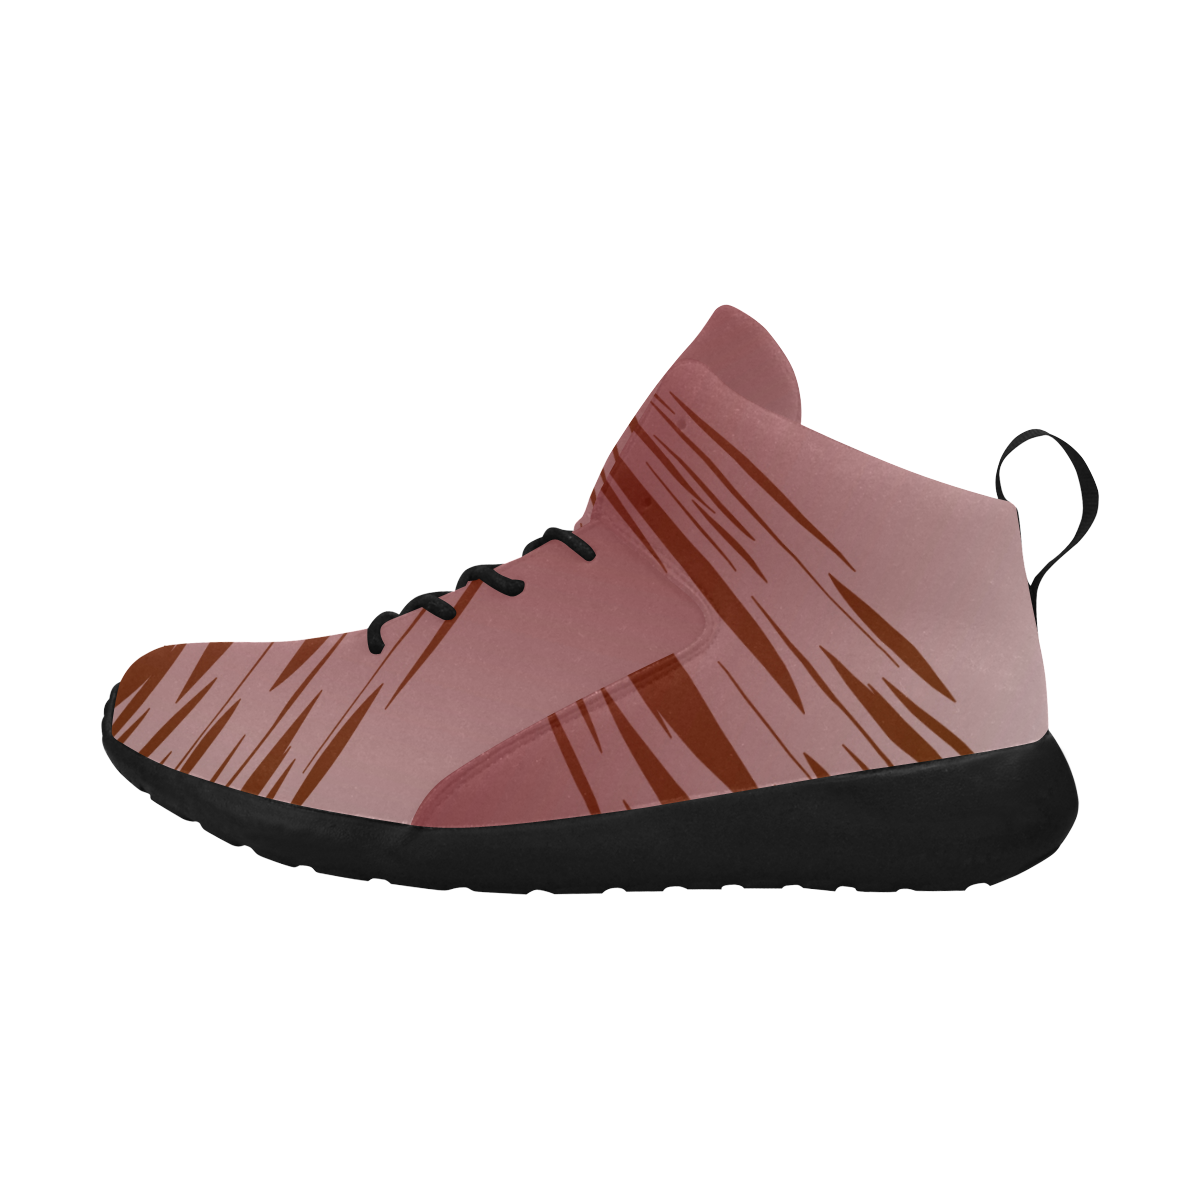 Wild, Choco ETHNIC LINES Men's Chukka Training Shoes (Model 57502)